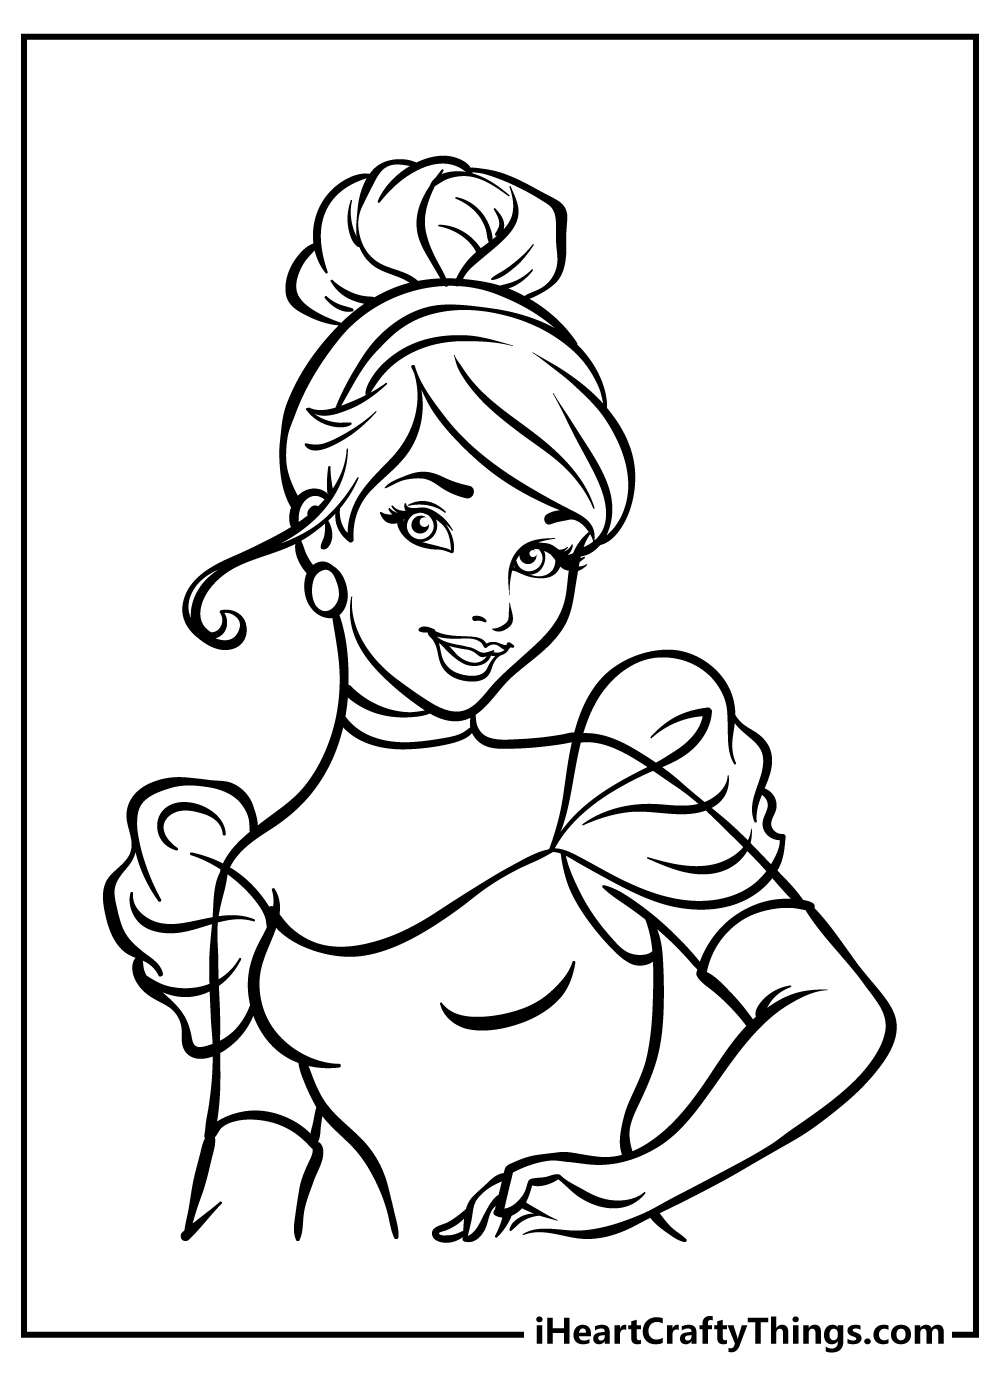 Cinderella coloring pages free printable